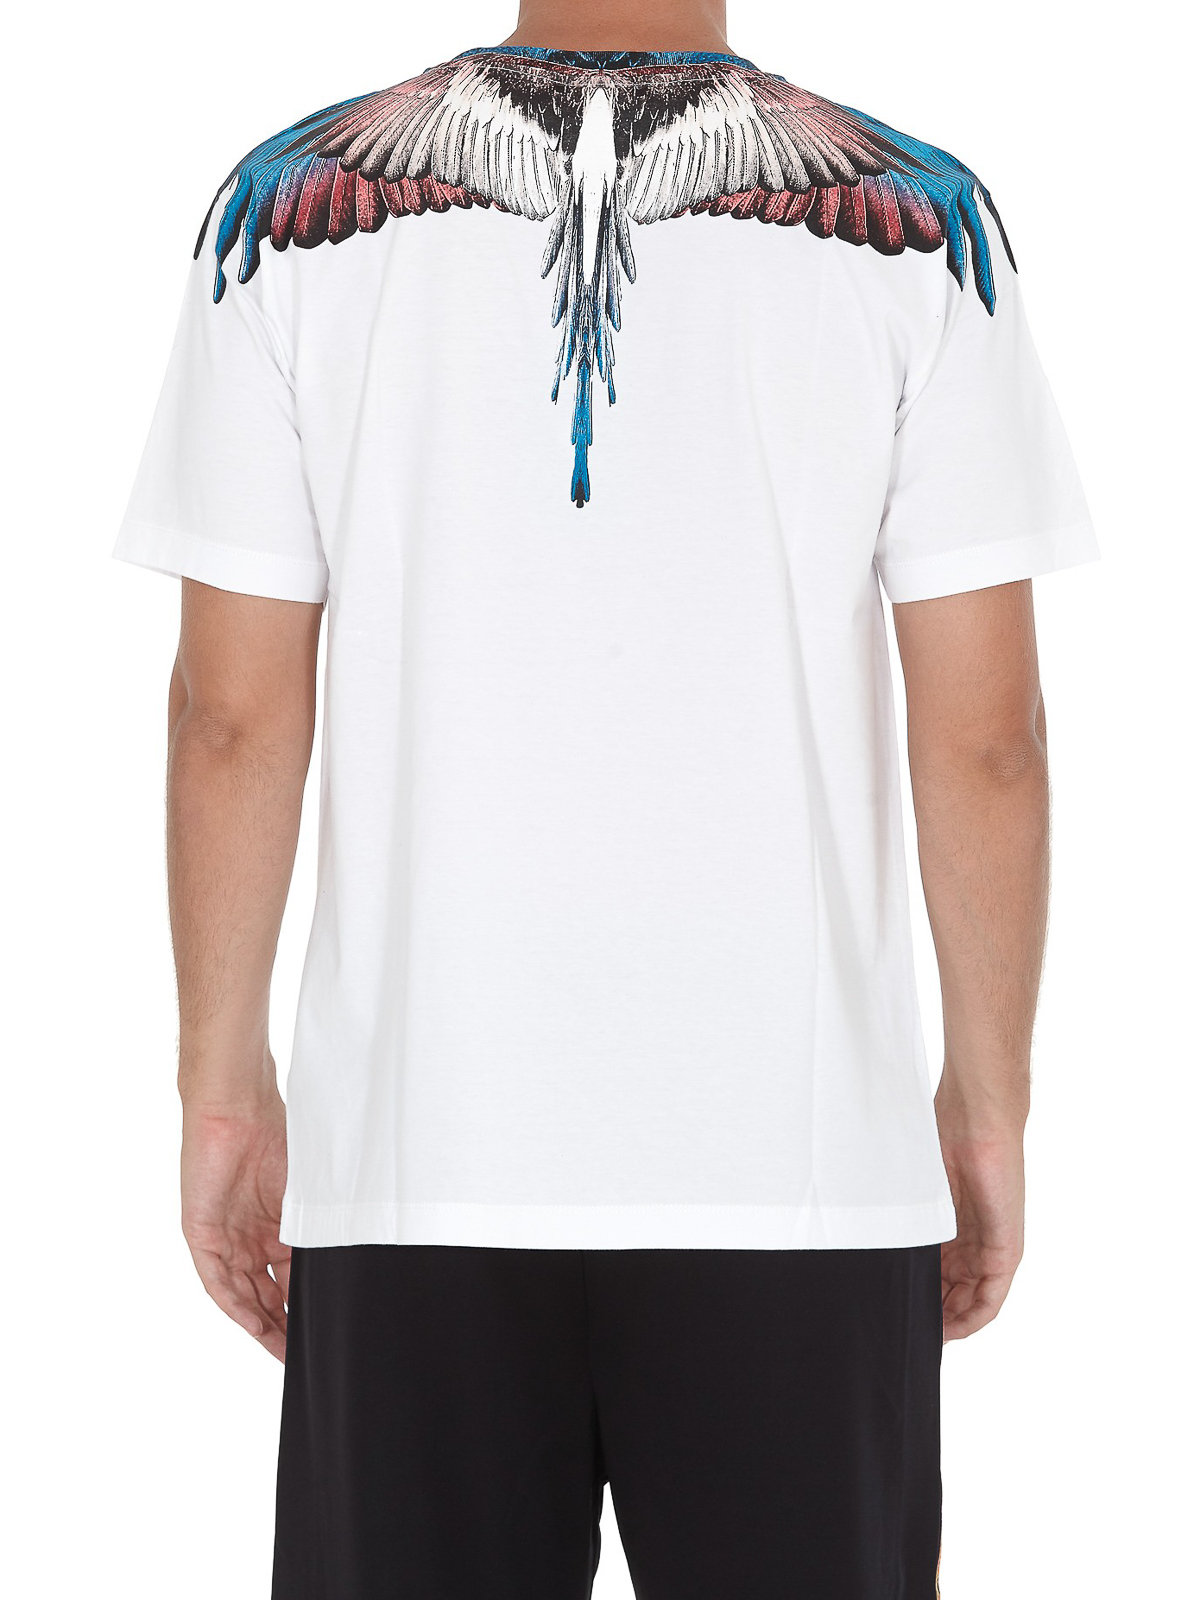 wings-t-shirt-shop-online-